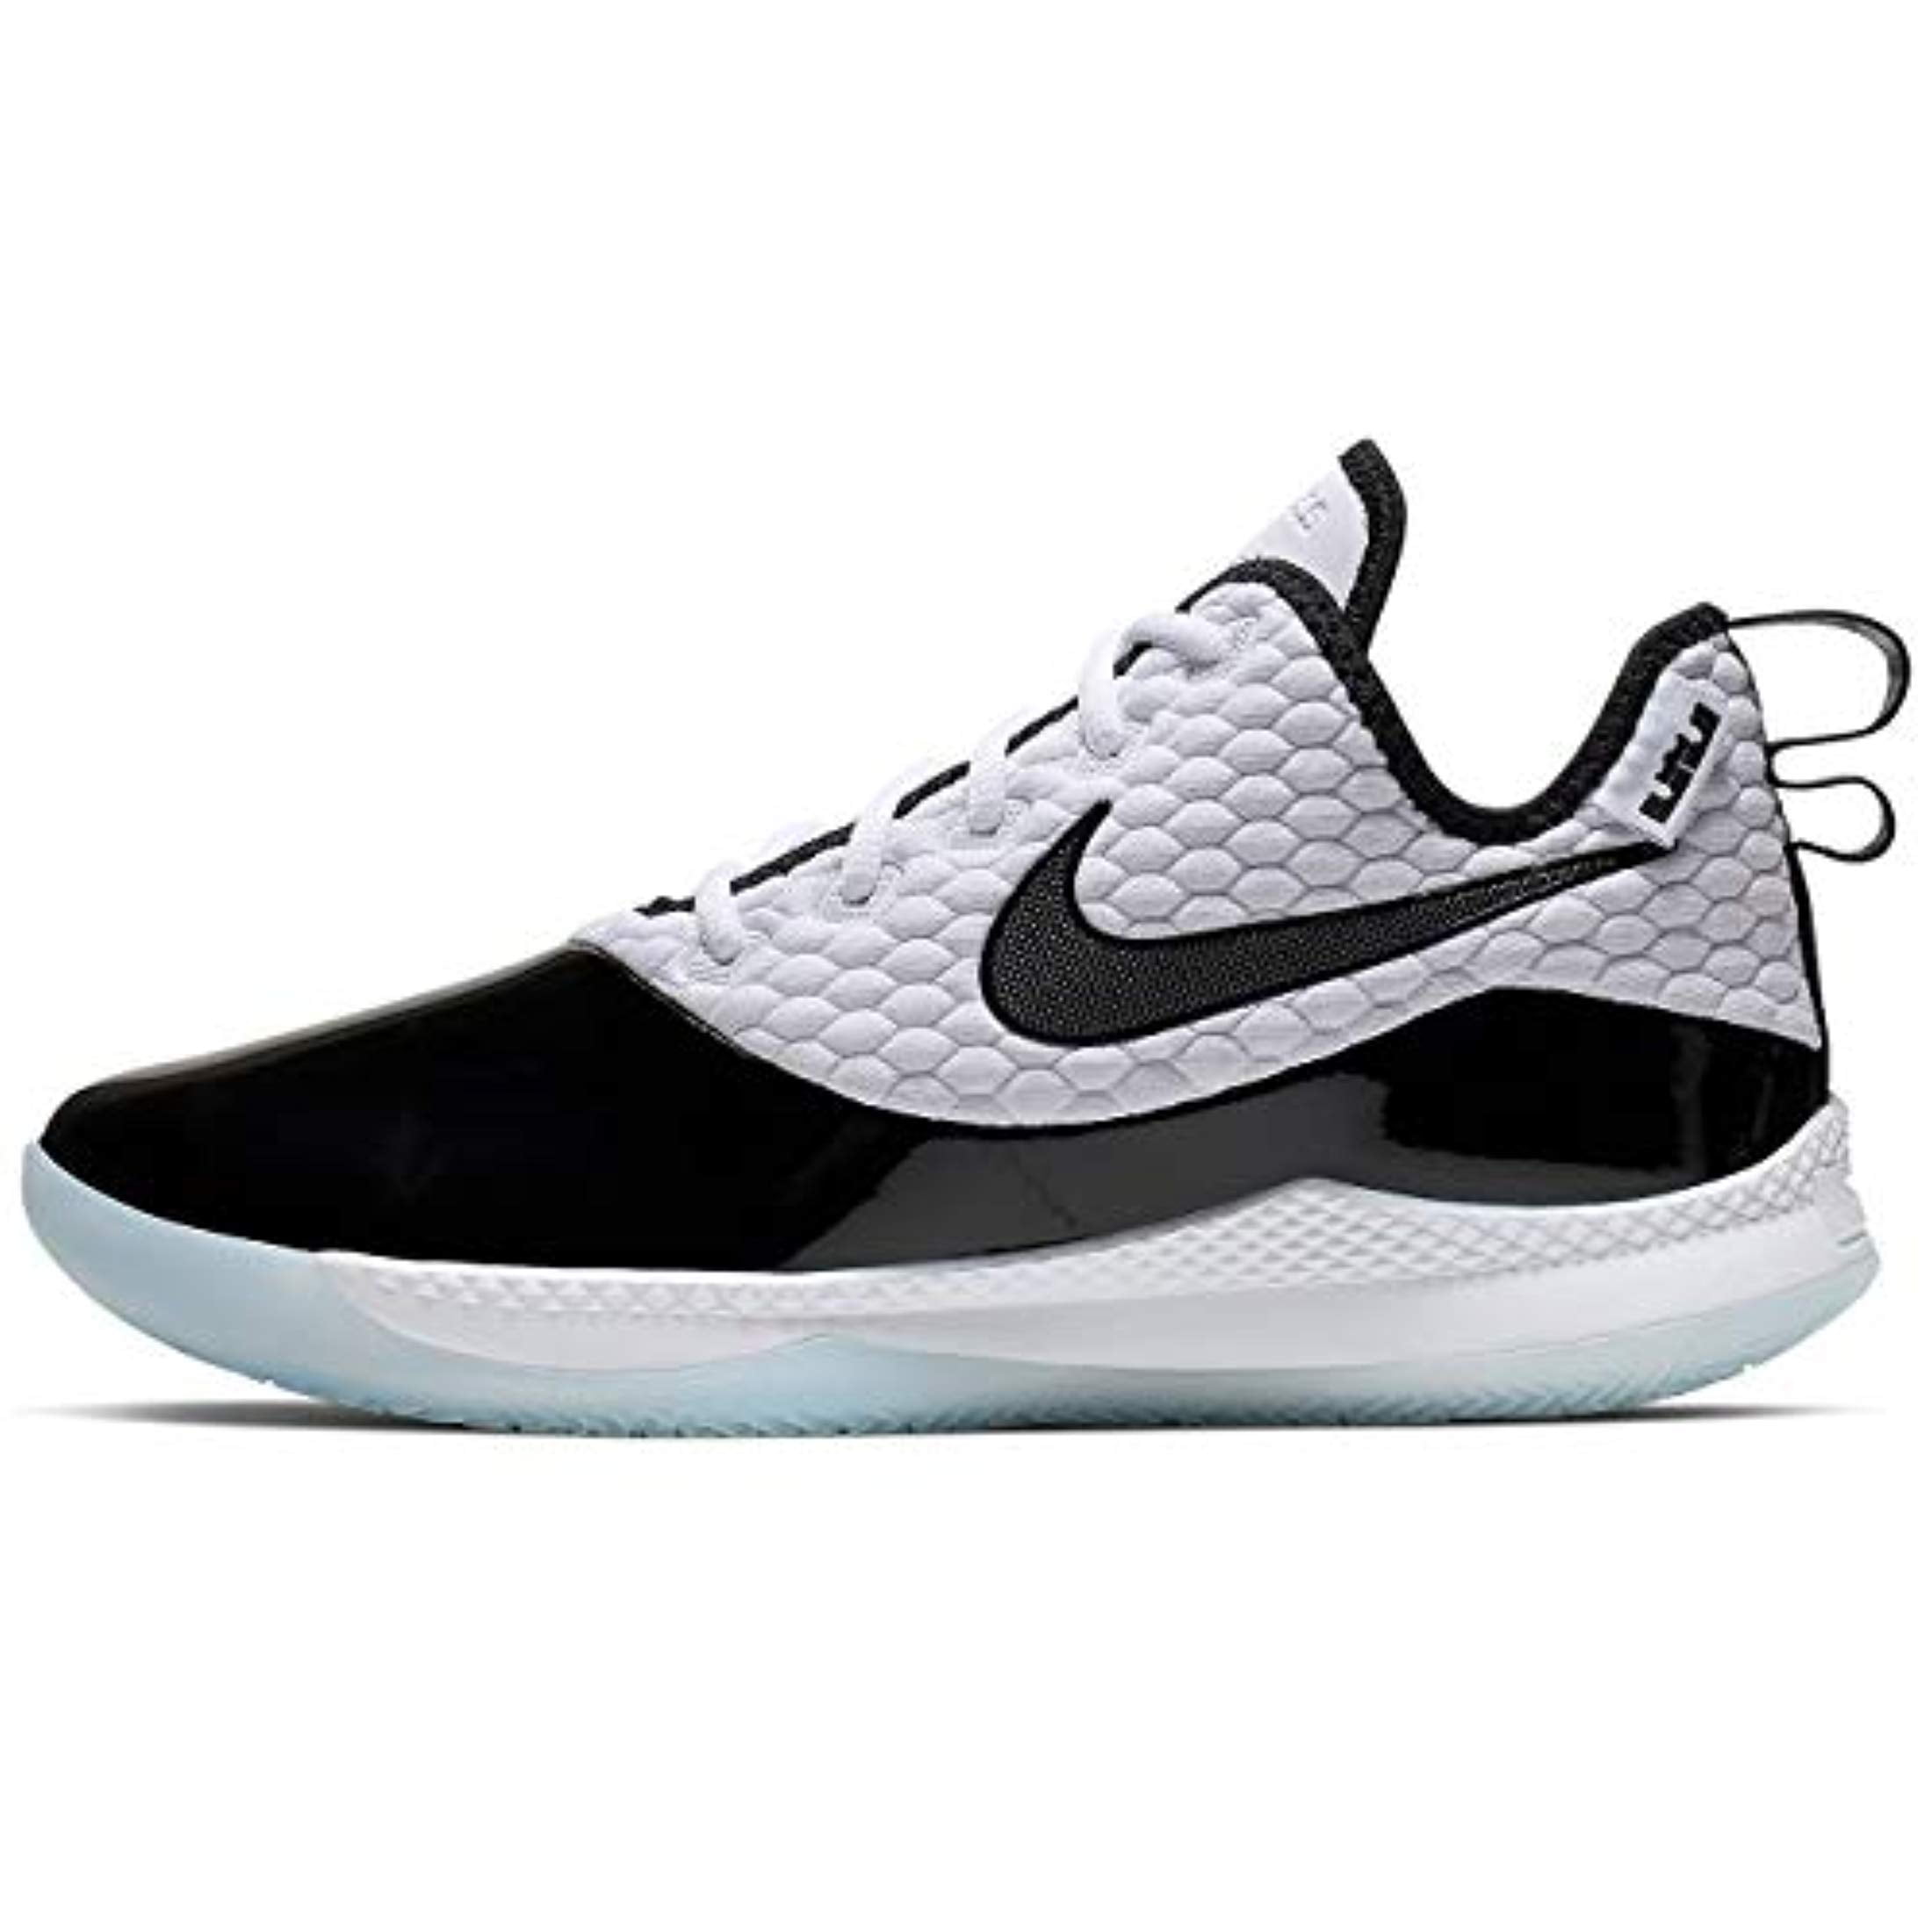 Nike Men's Lebron Witness III PRM Basketball Shoe White/Black/Half Blue ...